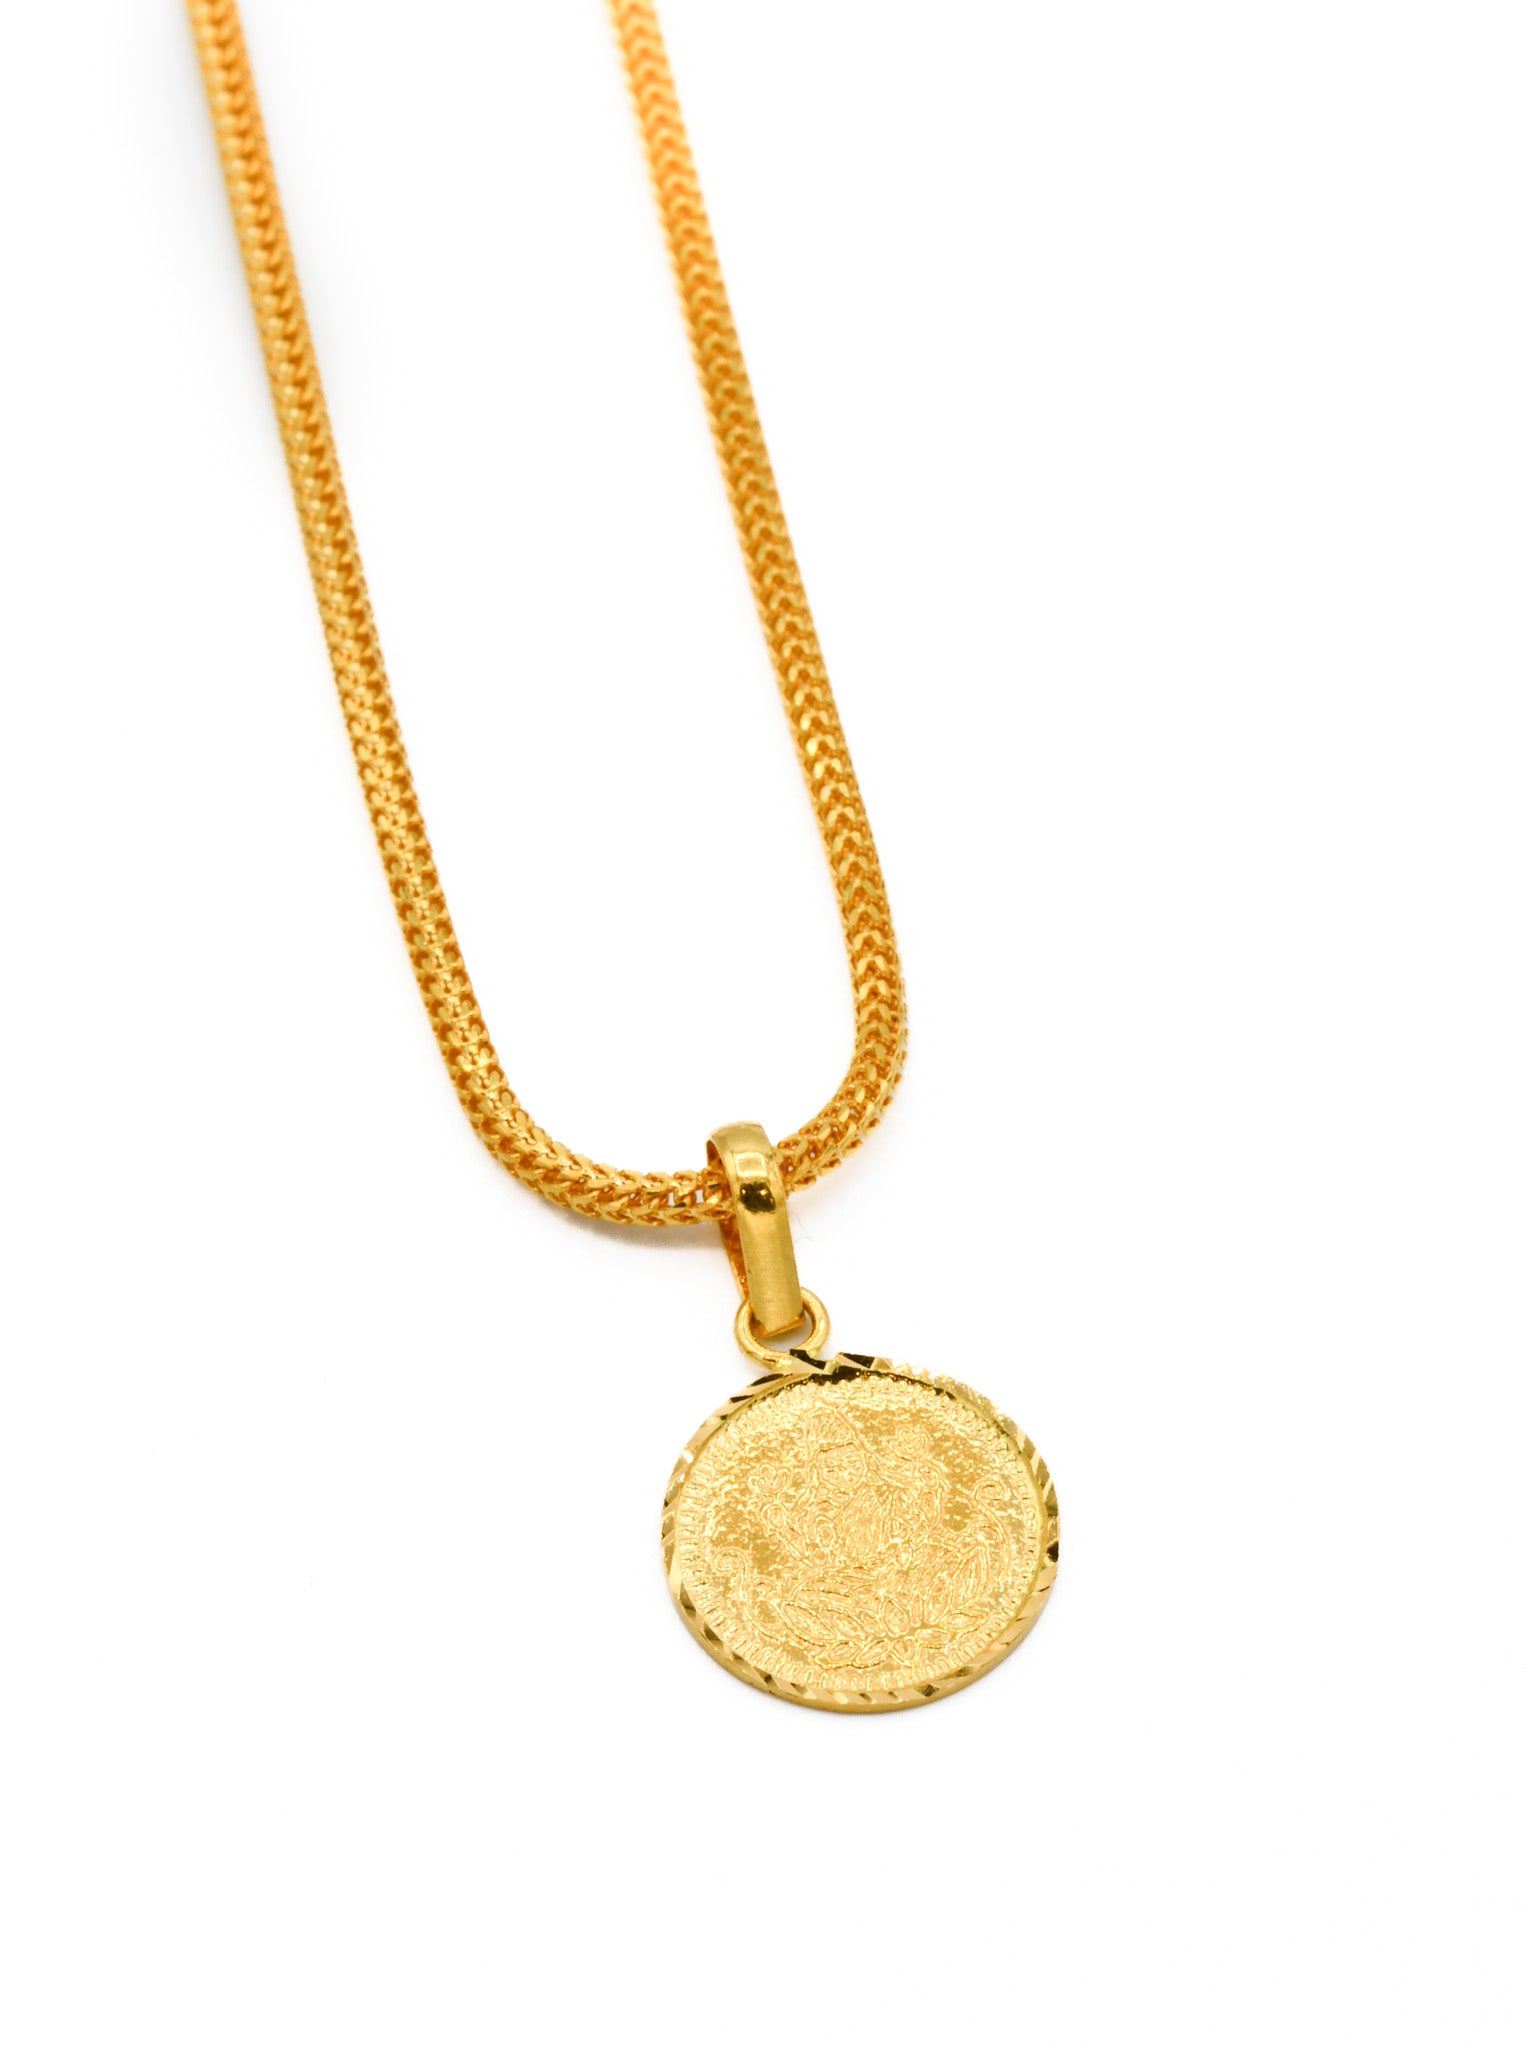 22ct Gold Laxmi Coin Pendant - Roop Darshan